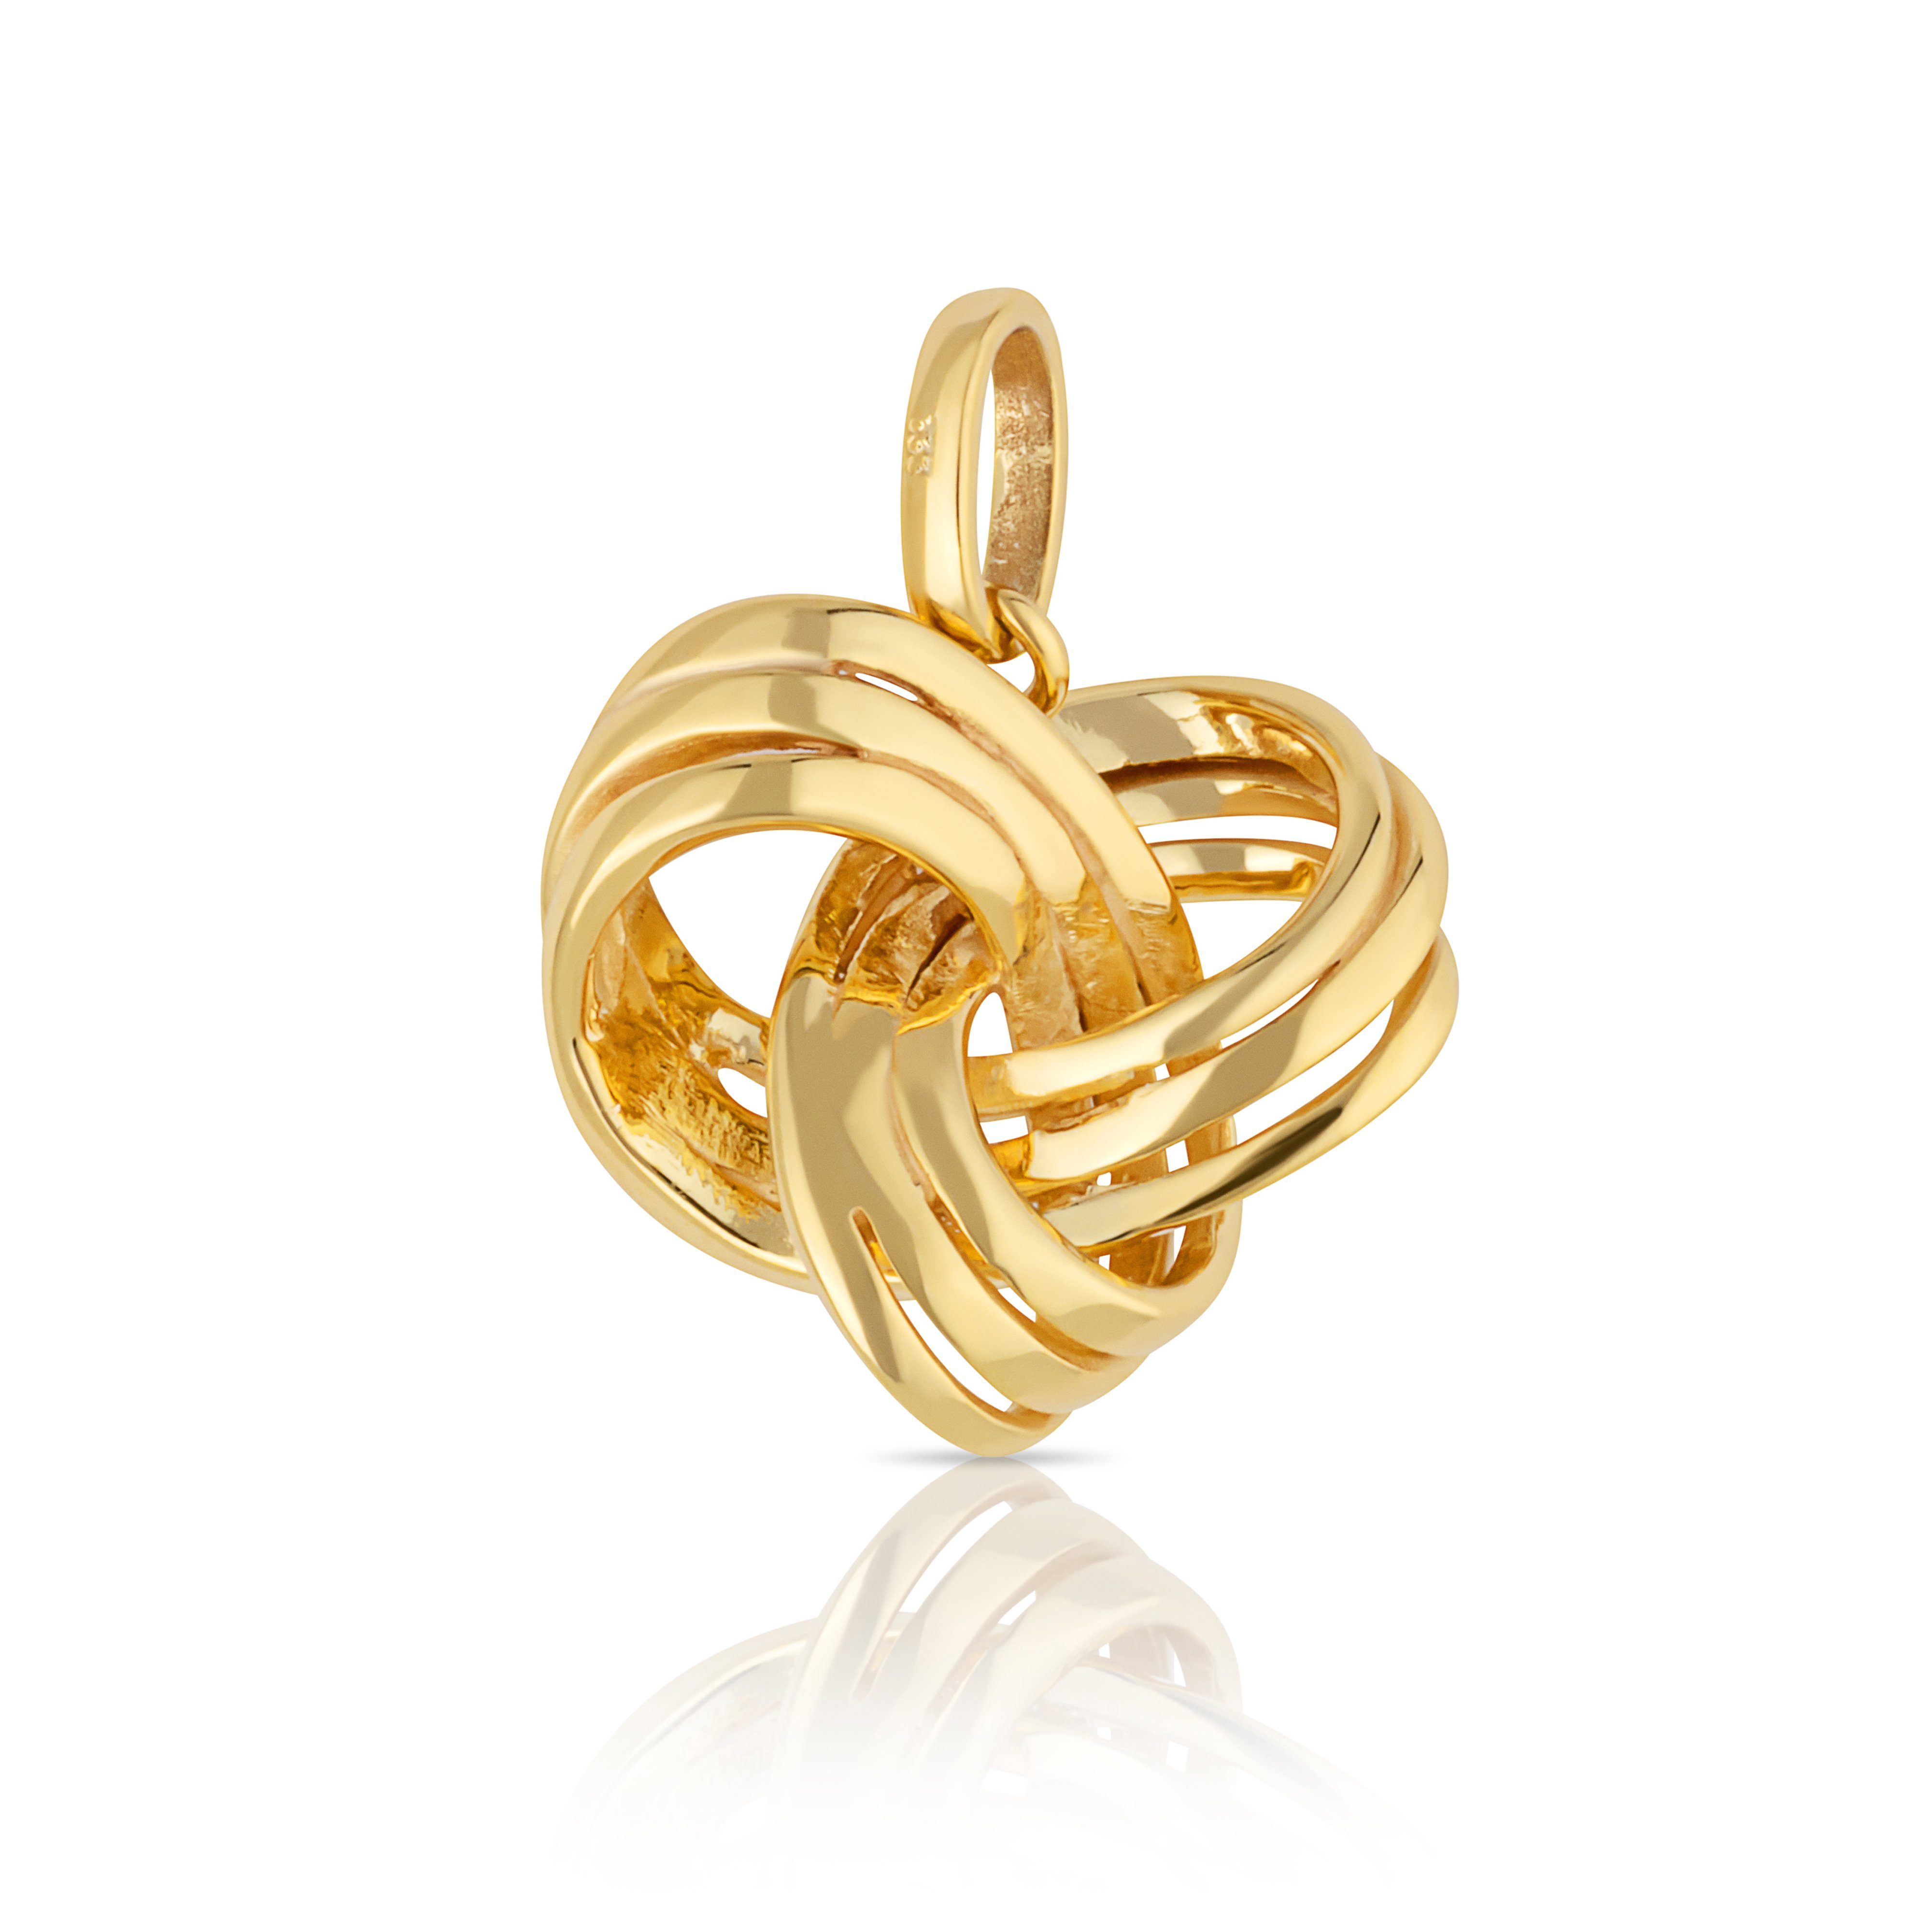 NKlaus Kettenanhänger Kettenanhänger 3D Herz Halskette 333 Gelb Gold 8 K